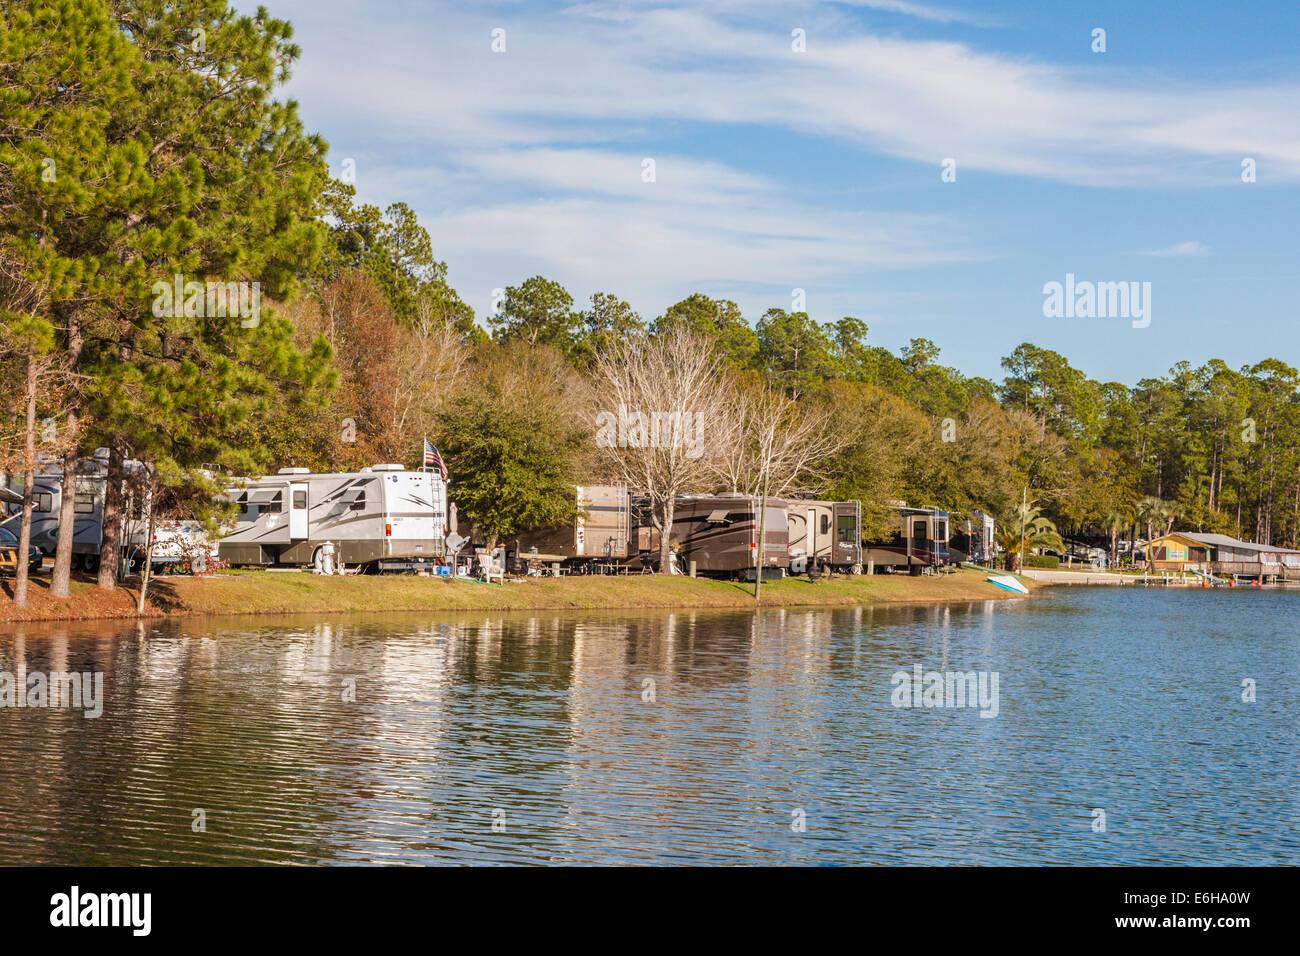 Motorhomes and campers line the lake shore at Flamingo Lake RV Resort in Jacksonville, Florida Stock Photo